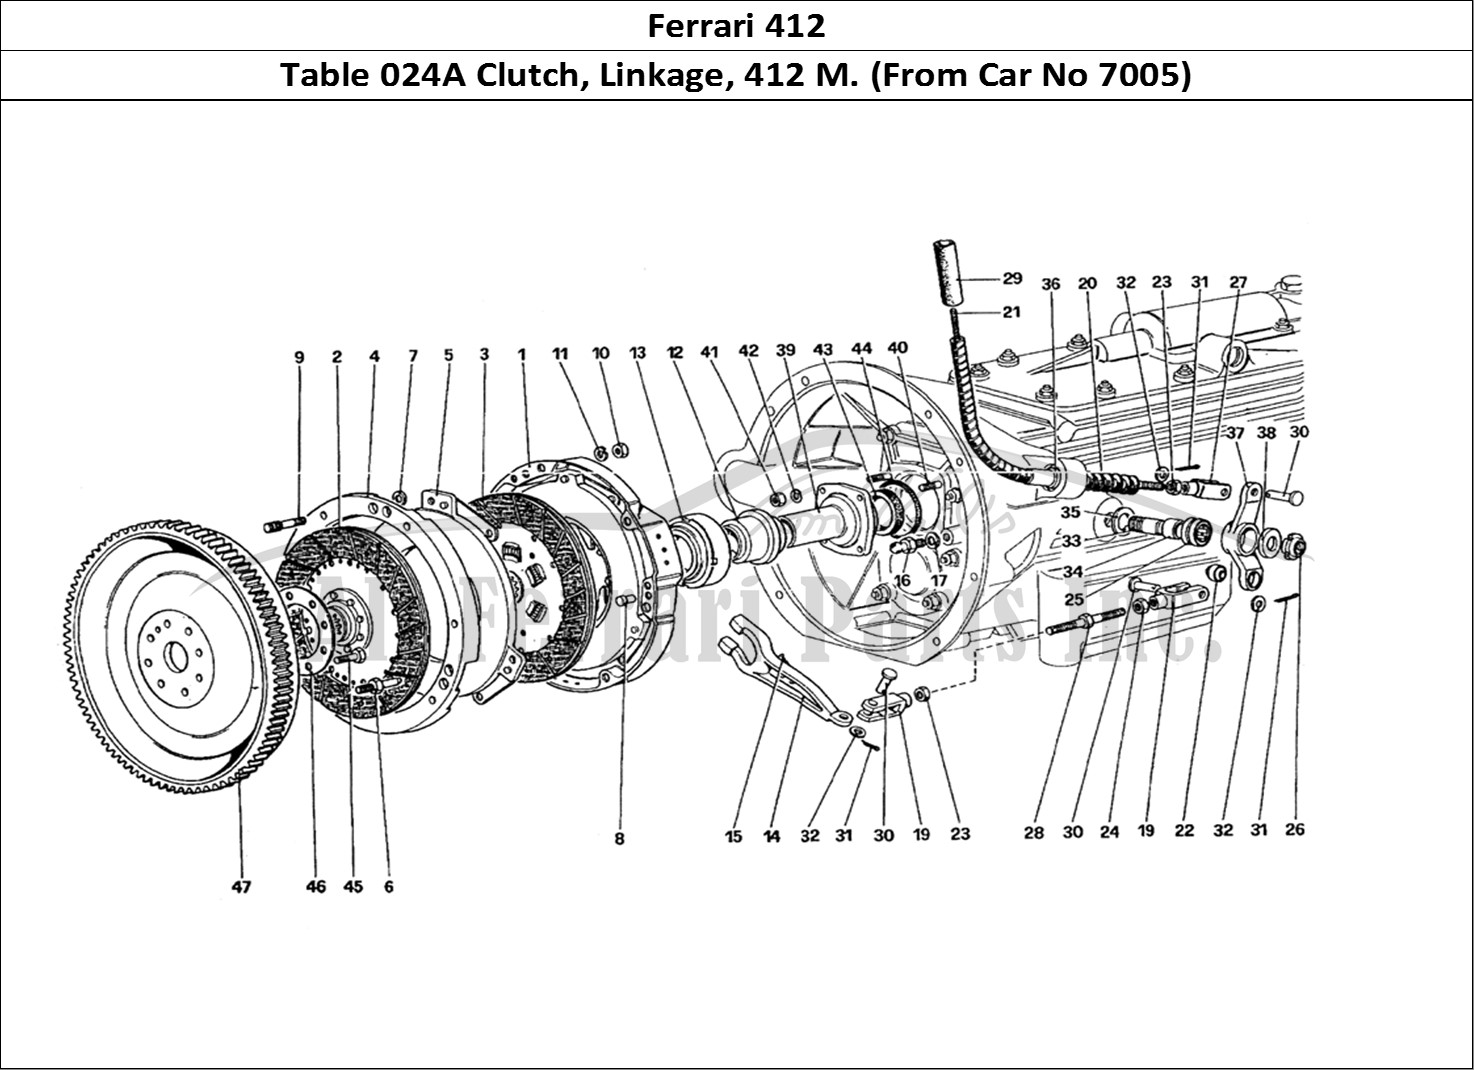 Ferrari Parts Ferrari 412 (Mechanical) Page 024 ClutCH System and Control